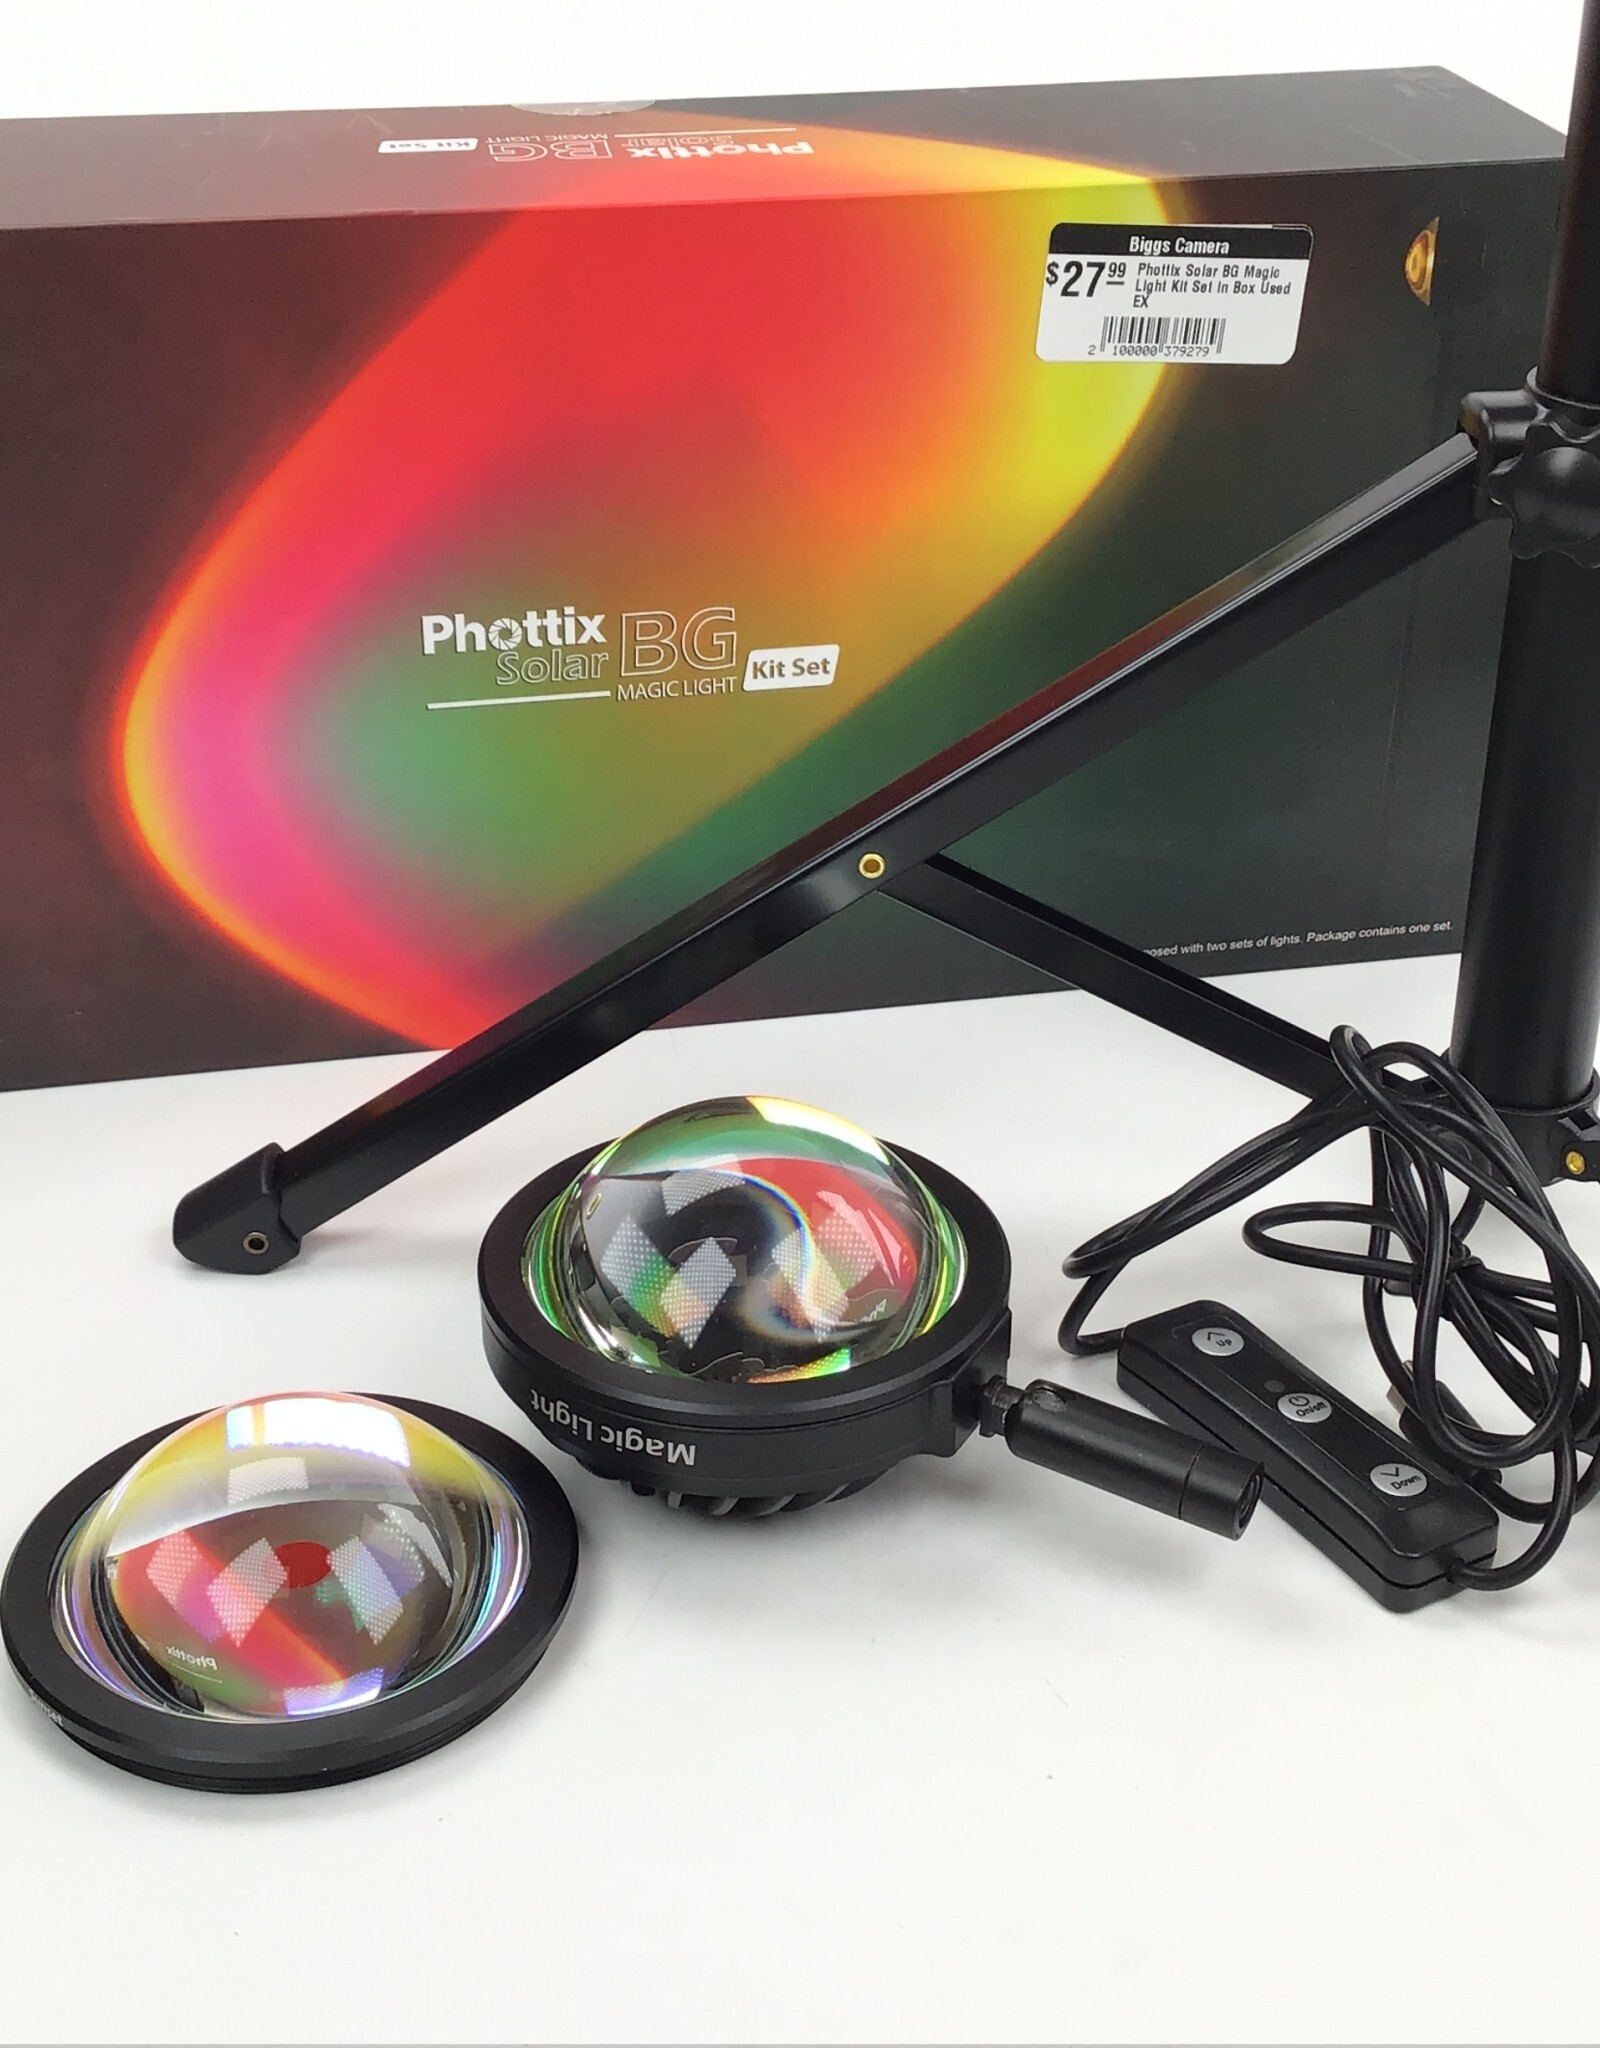 PHOTTIX Phottix Solar BG Magic Light Kit Set in Box Used EX